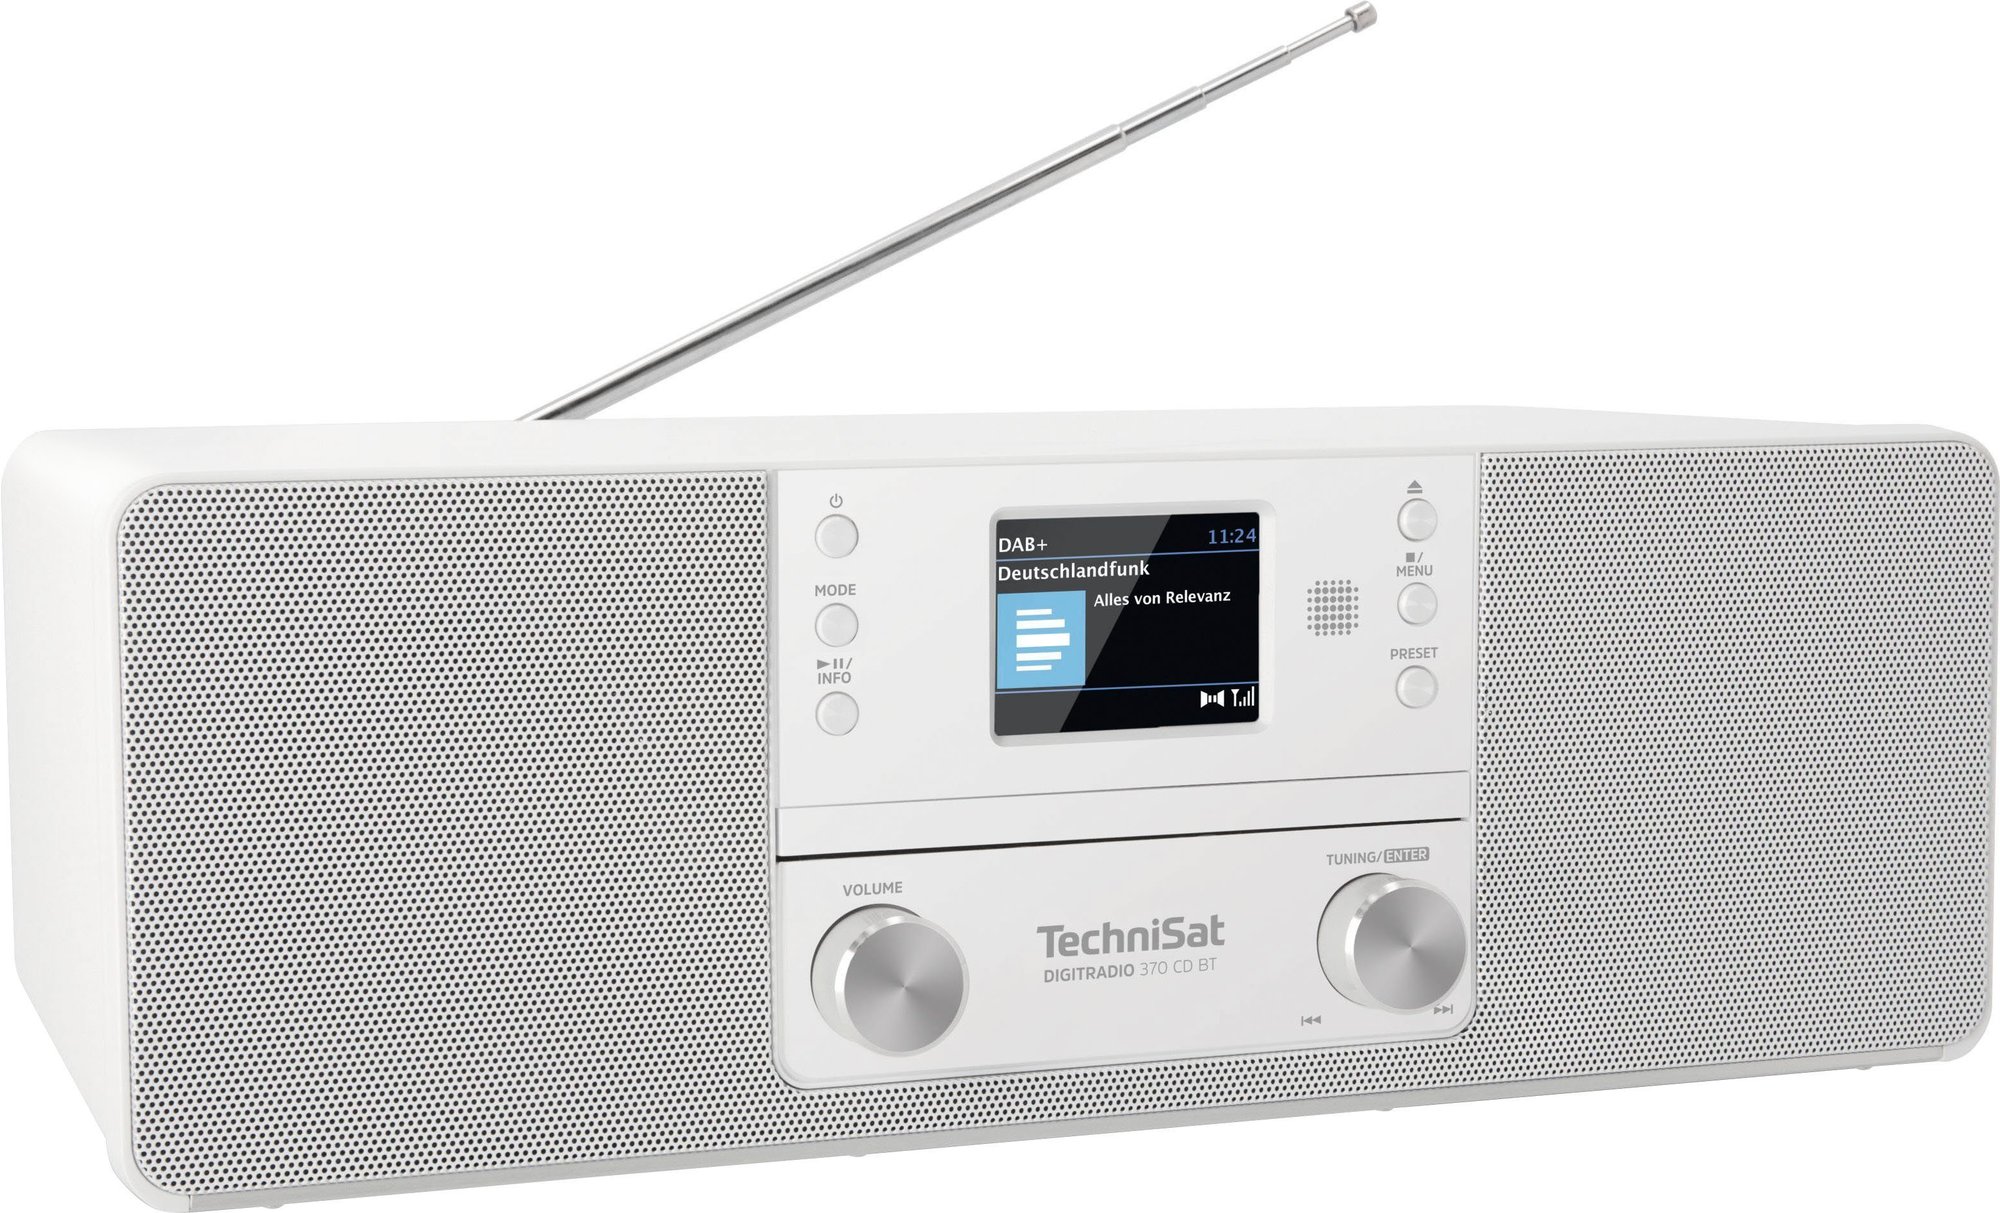 TechniSat DigitRadio 370 CD BT weiß Test ❤️ Testbericht.de Februar 2022